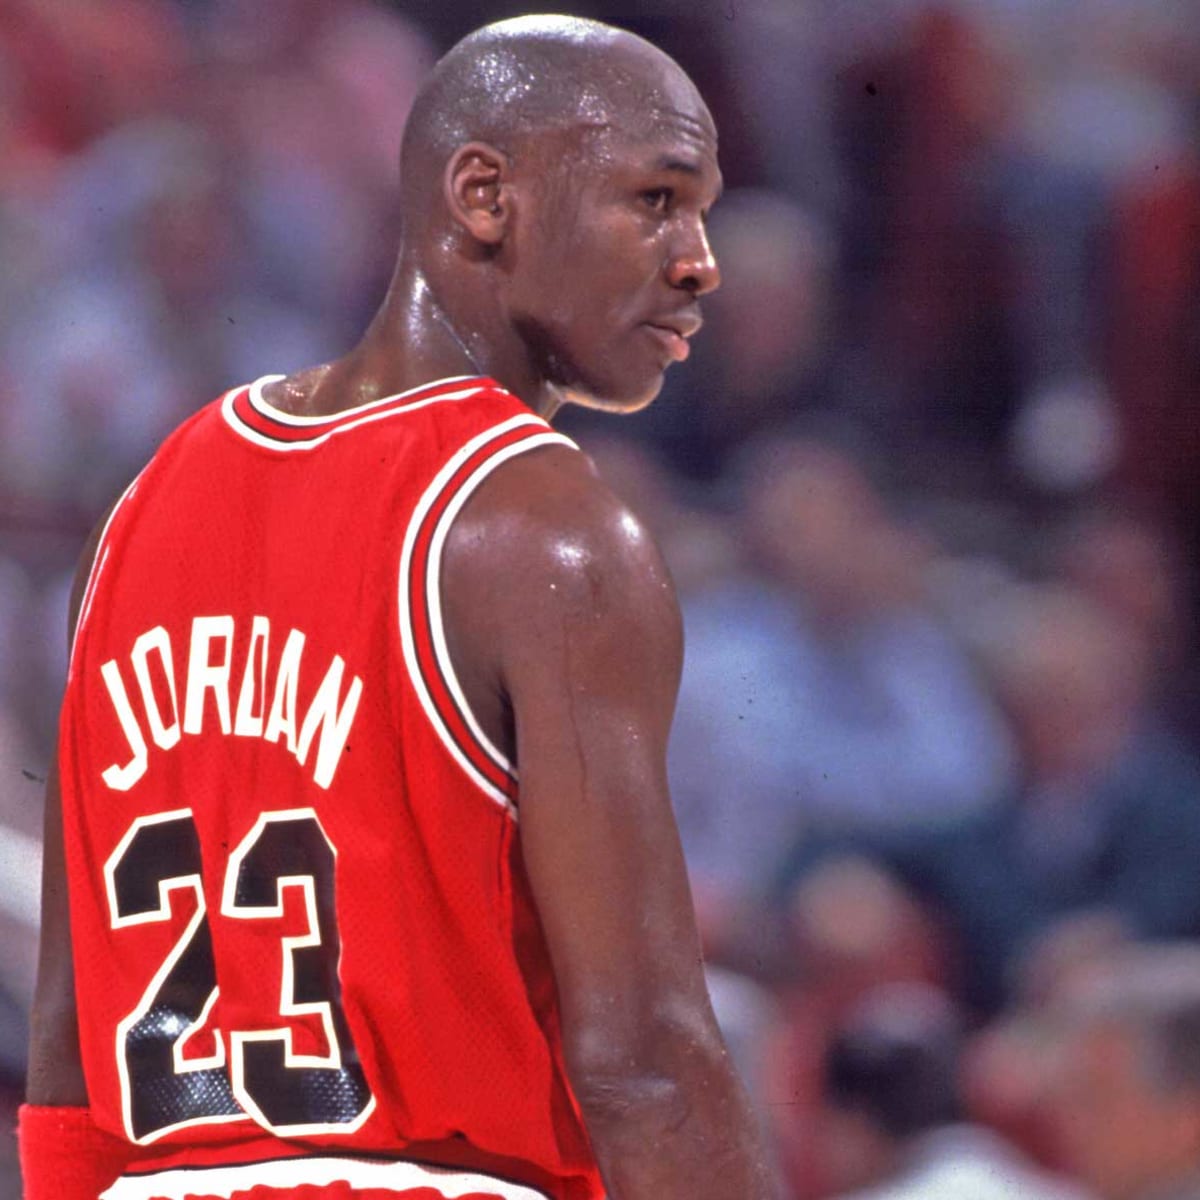 Michael Jordan's performance in the 1990 3PT contest put him on